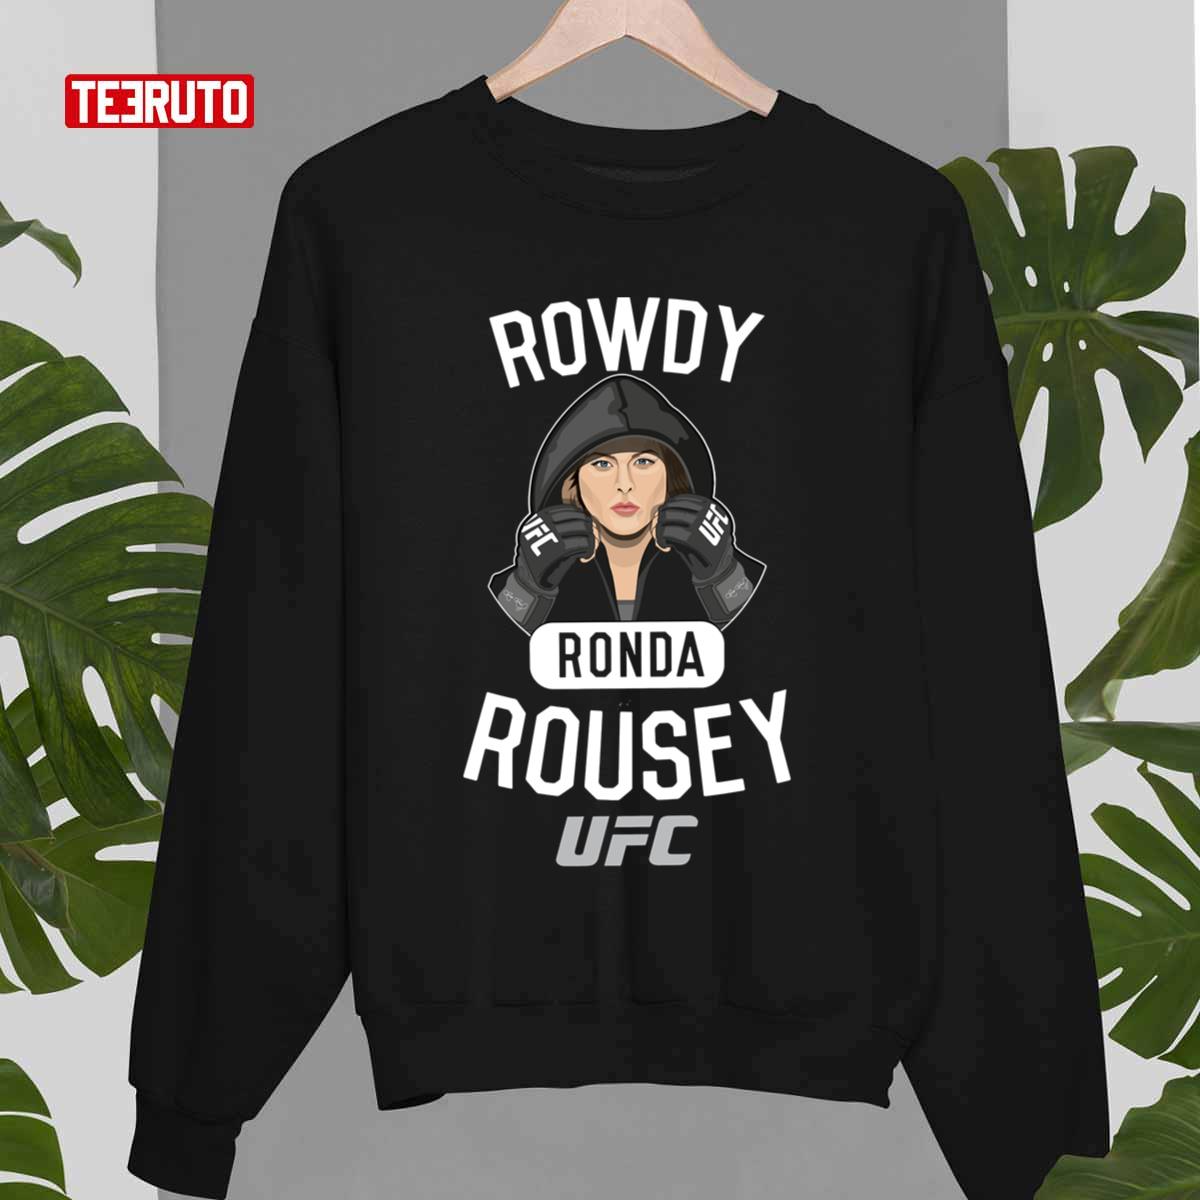 Rowdy Ronda Rousey UFC Black Unisex T-Shirt